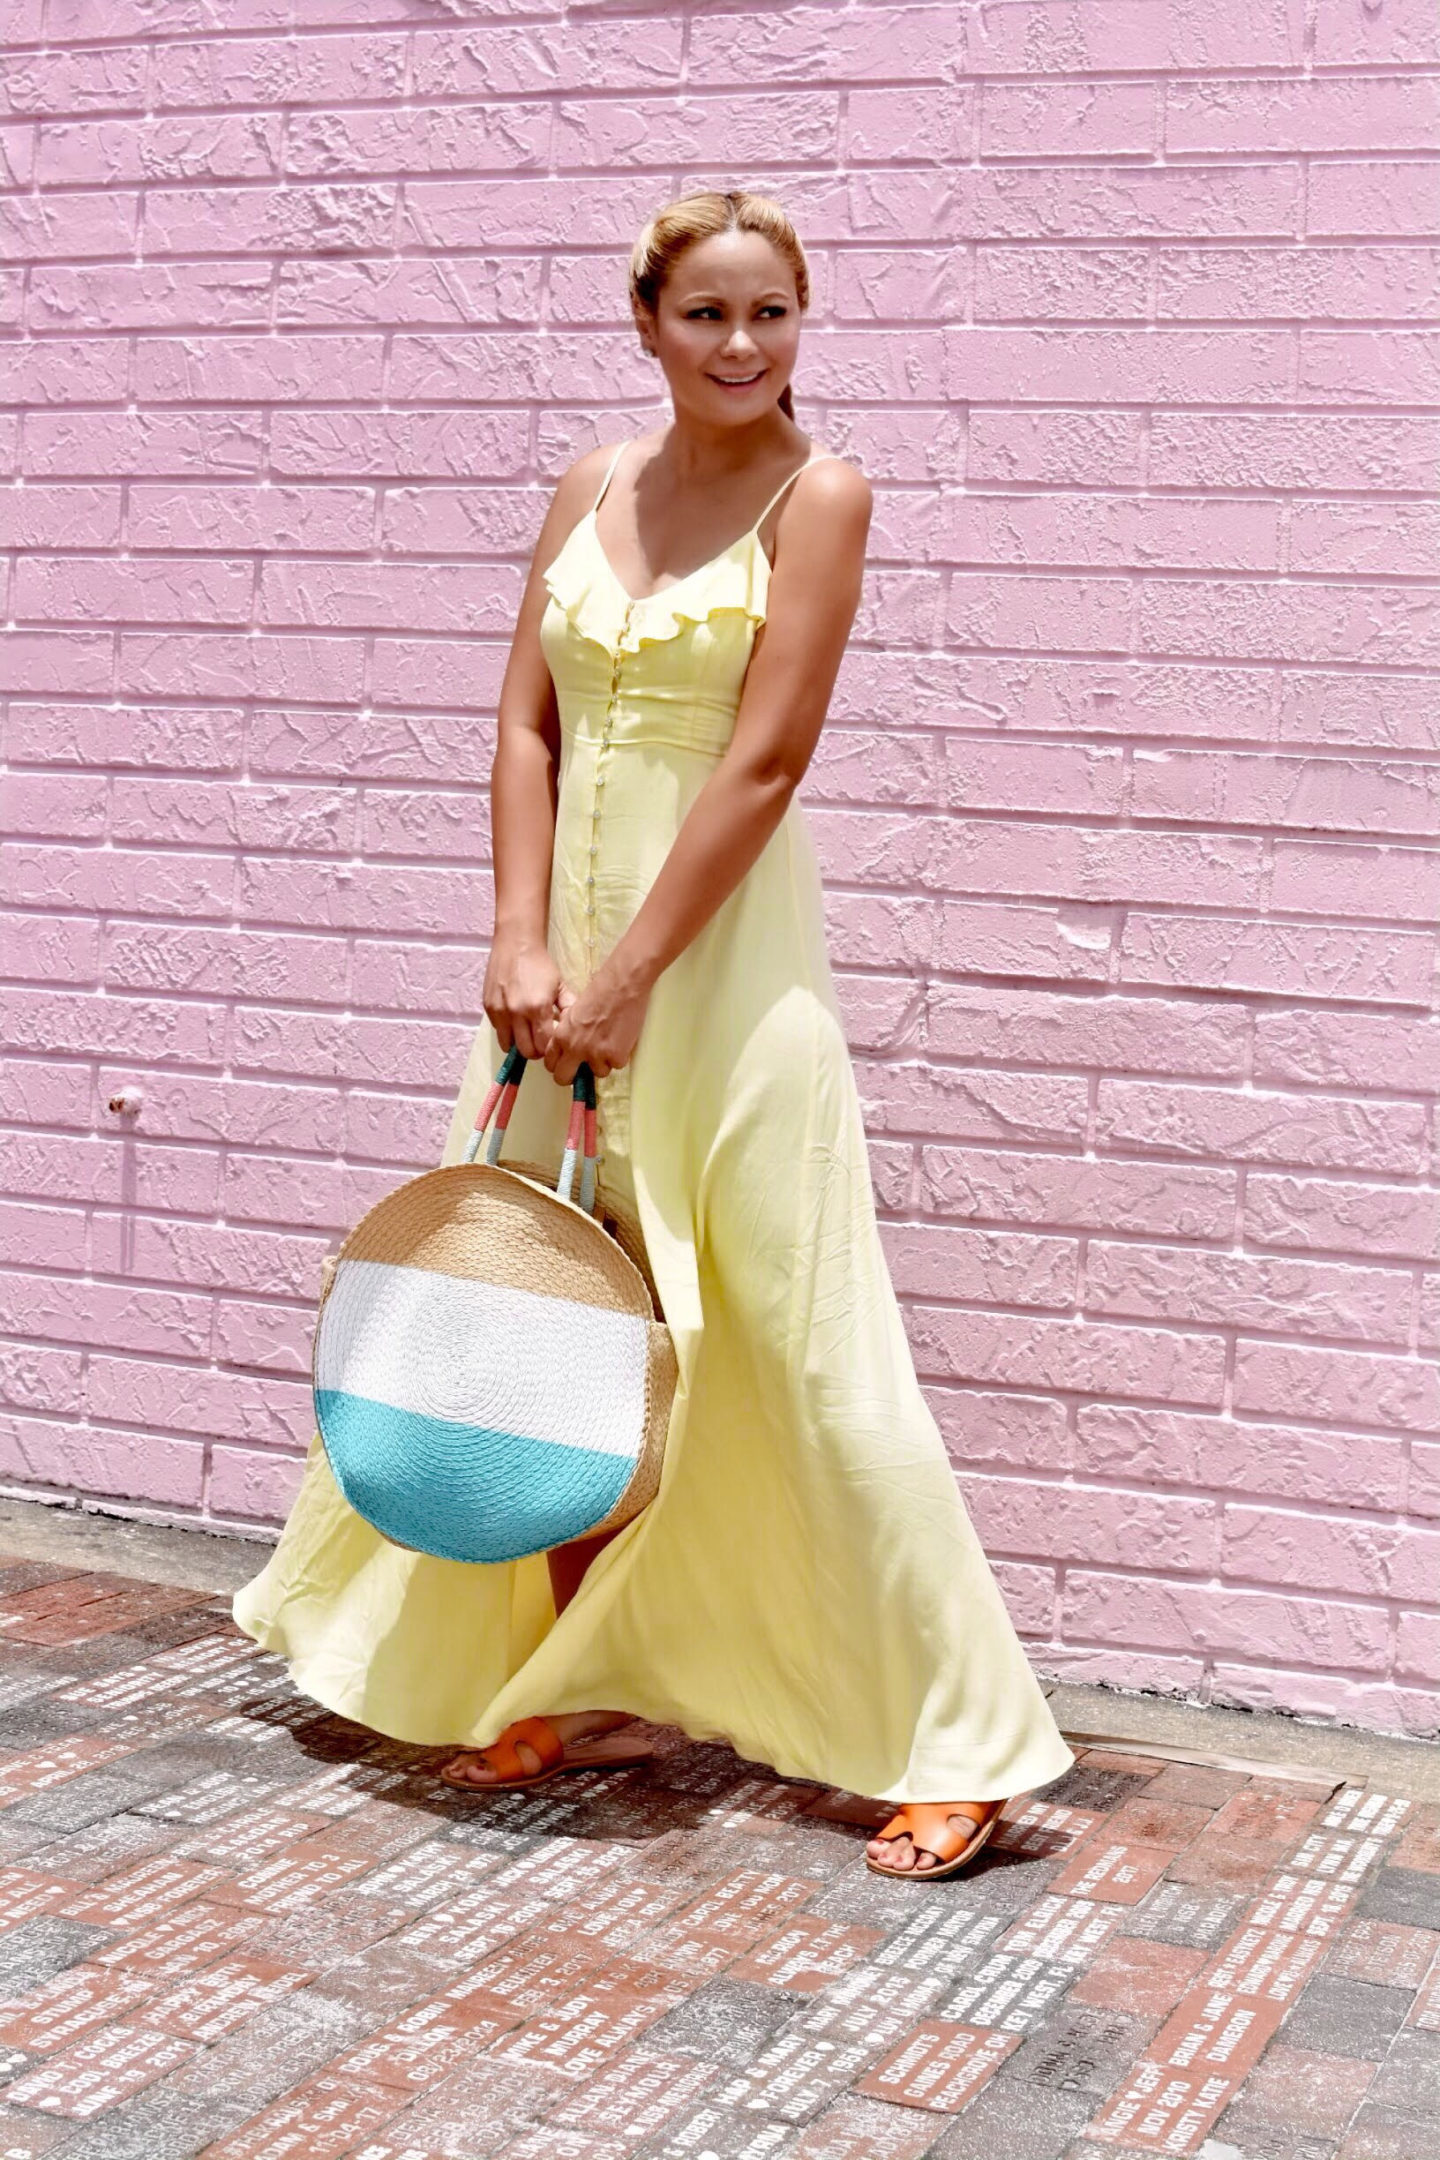 New-Smyrna-Beach-yellow-maxi-dress-famous-blogger-whatwouldvwear-vanessa-lambert